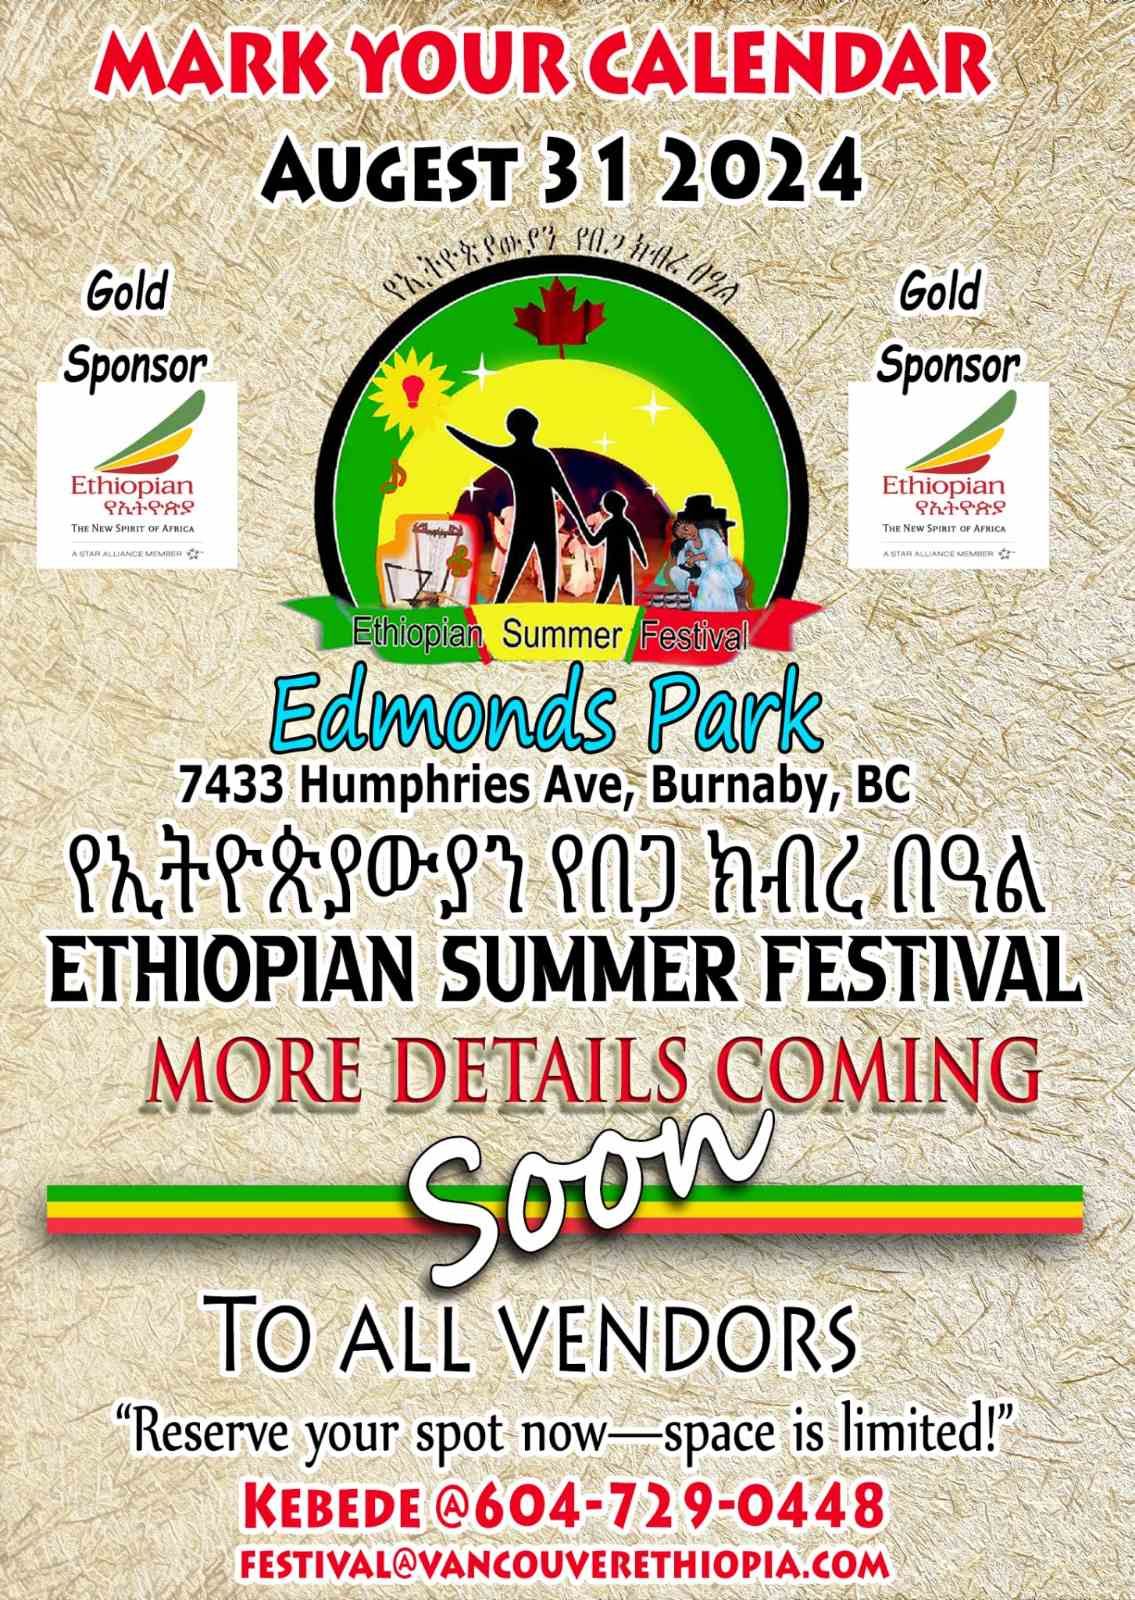 The Ethiopian summer festival 